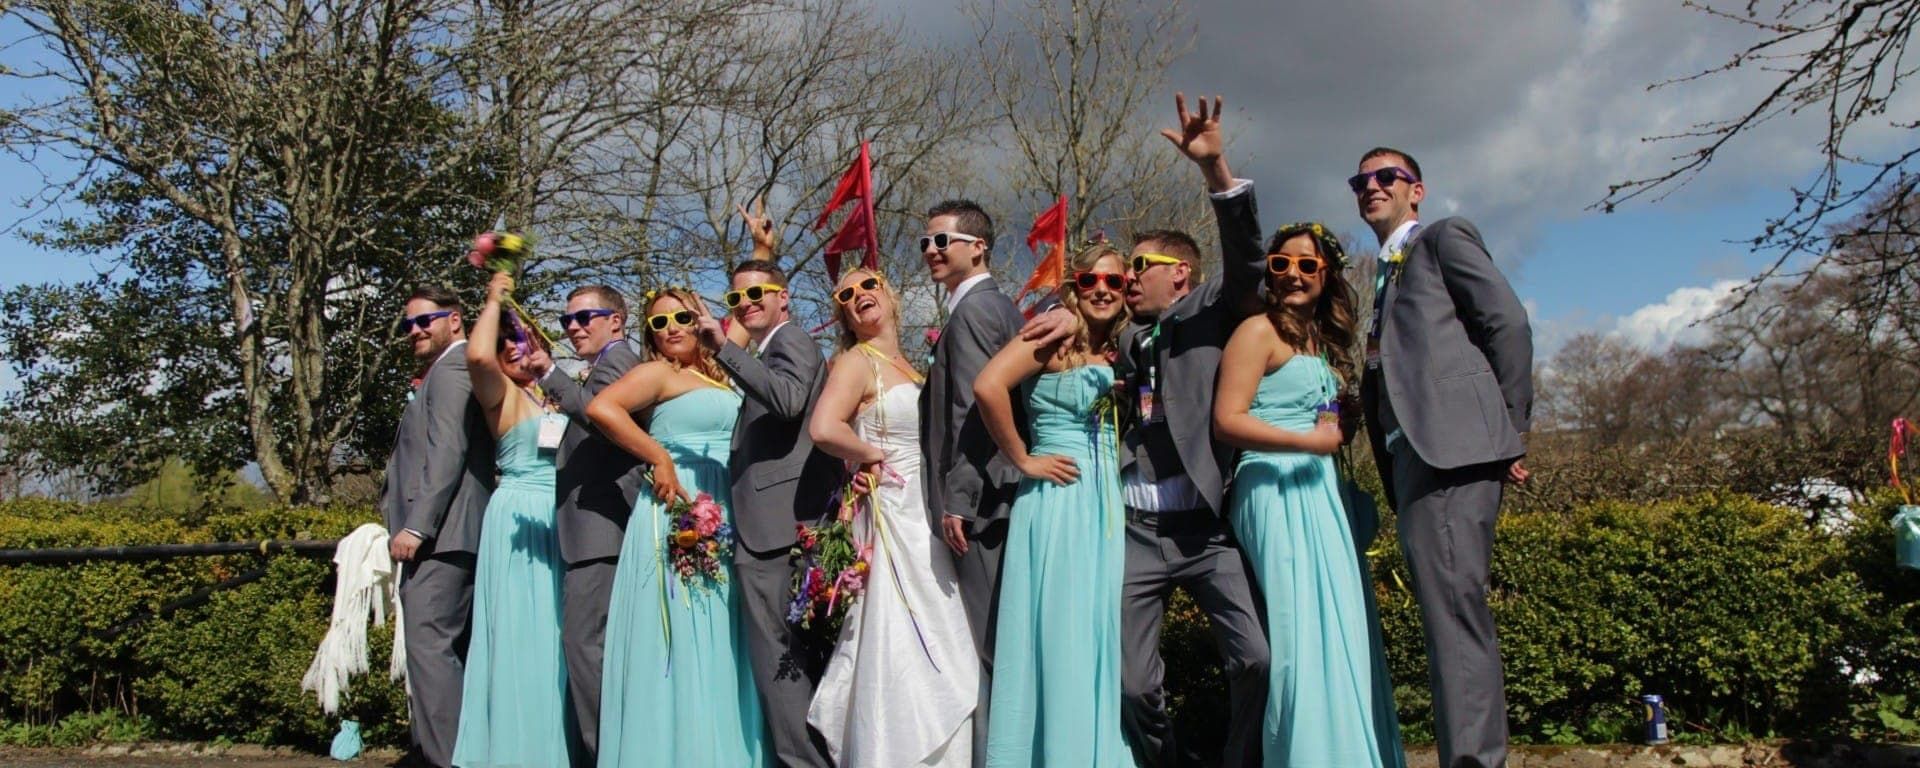 Music Festival Theme for Lake District Wedding